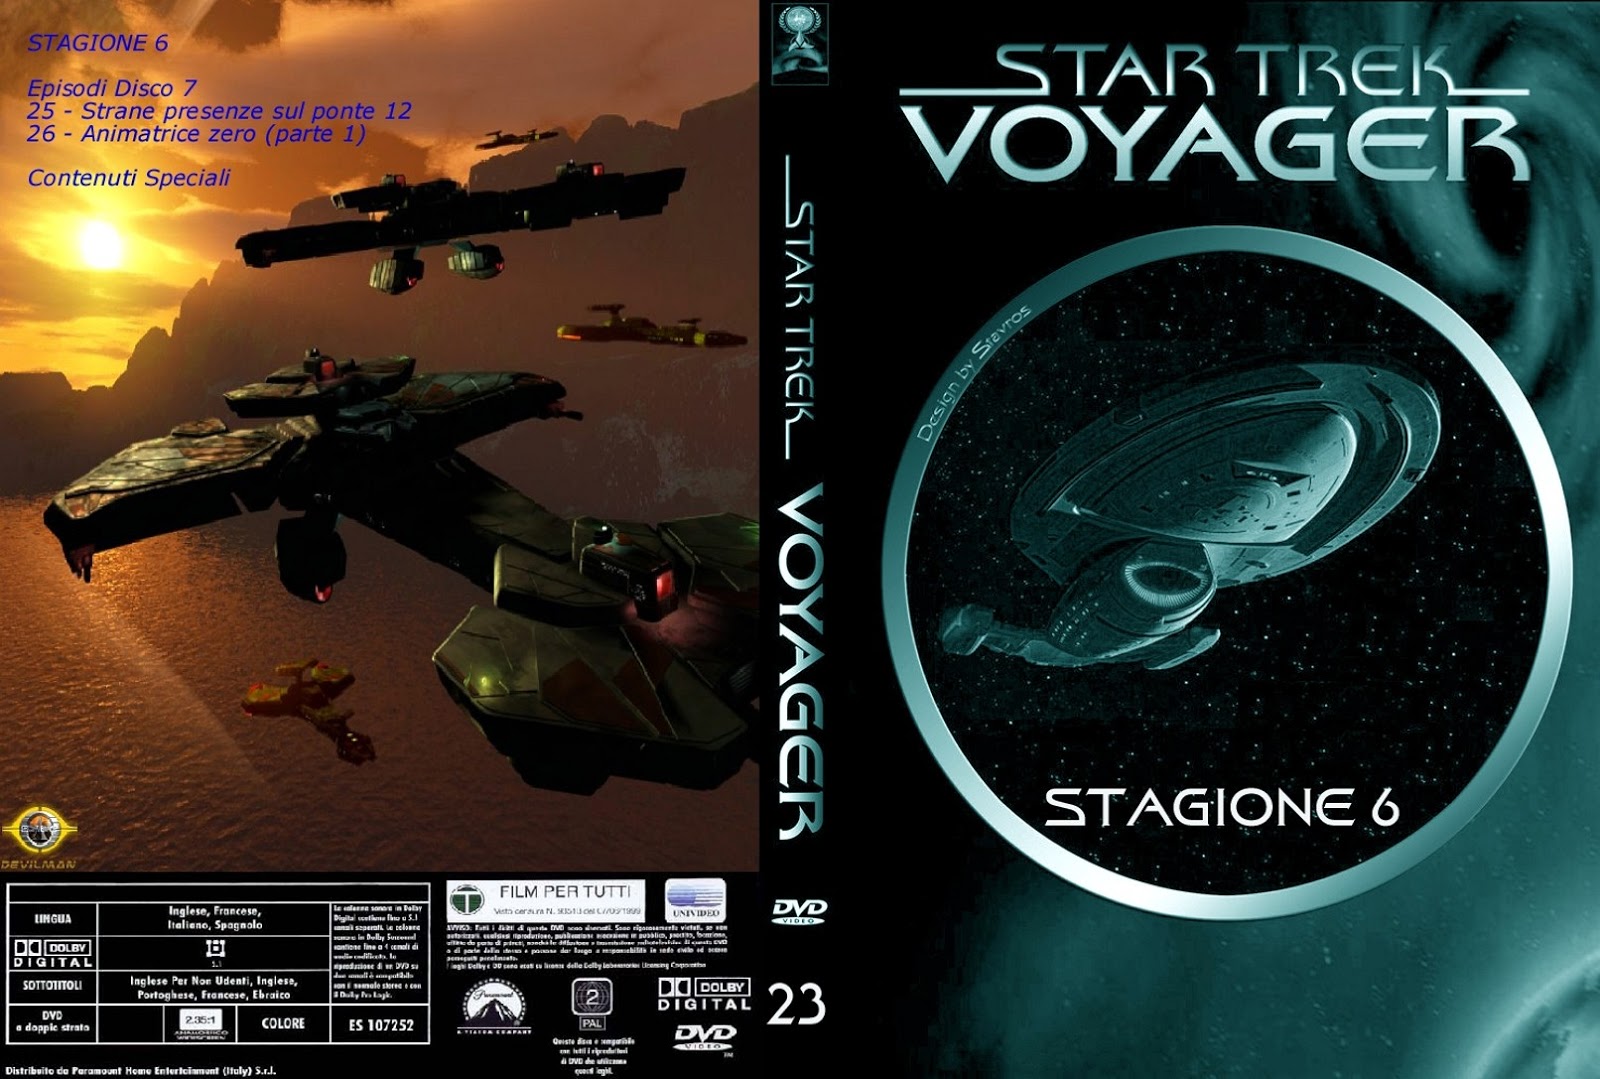 https://blogger.googleusercontent.com/img/b/R29vZ2xl/AVvXsEhuH8ZgZ88WLrMggDGkdTPP4IZoacZjM08WAlJ9RL1miLD6kEk6UeN3oYVGy5o99vZGMER0njizAqGBUEPoYiFo4rq08SAVtG9W51KGaxpsN_rl6ctFiNcDdeKST8Ue_wd2Wgp8E-FT6X4/s1600/Star+Trek+Voyager+6%C2%B0+Stagione+(2003-2004).jpg